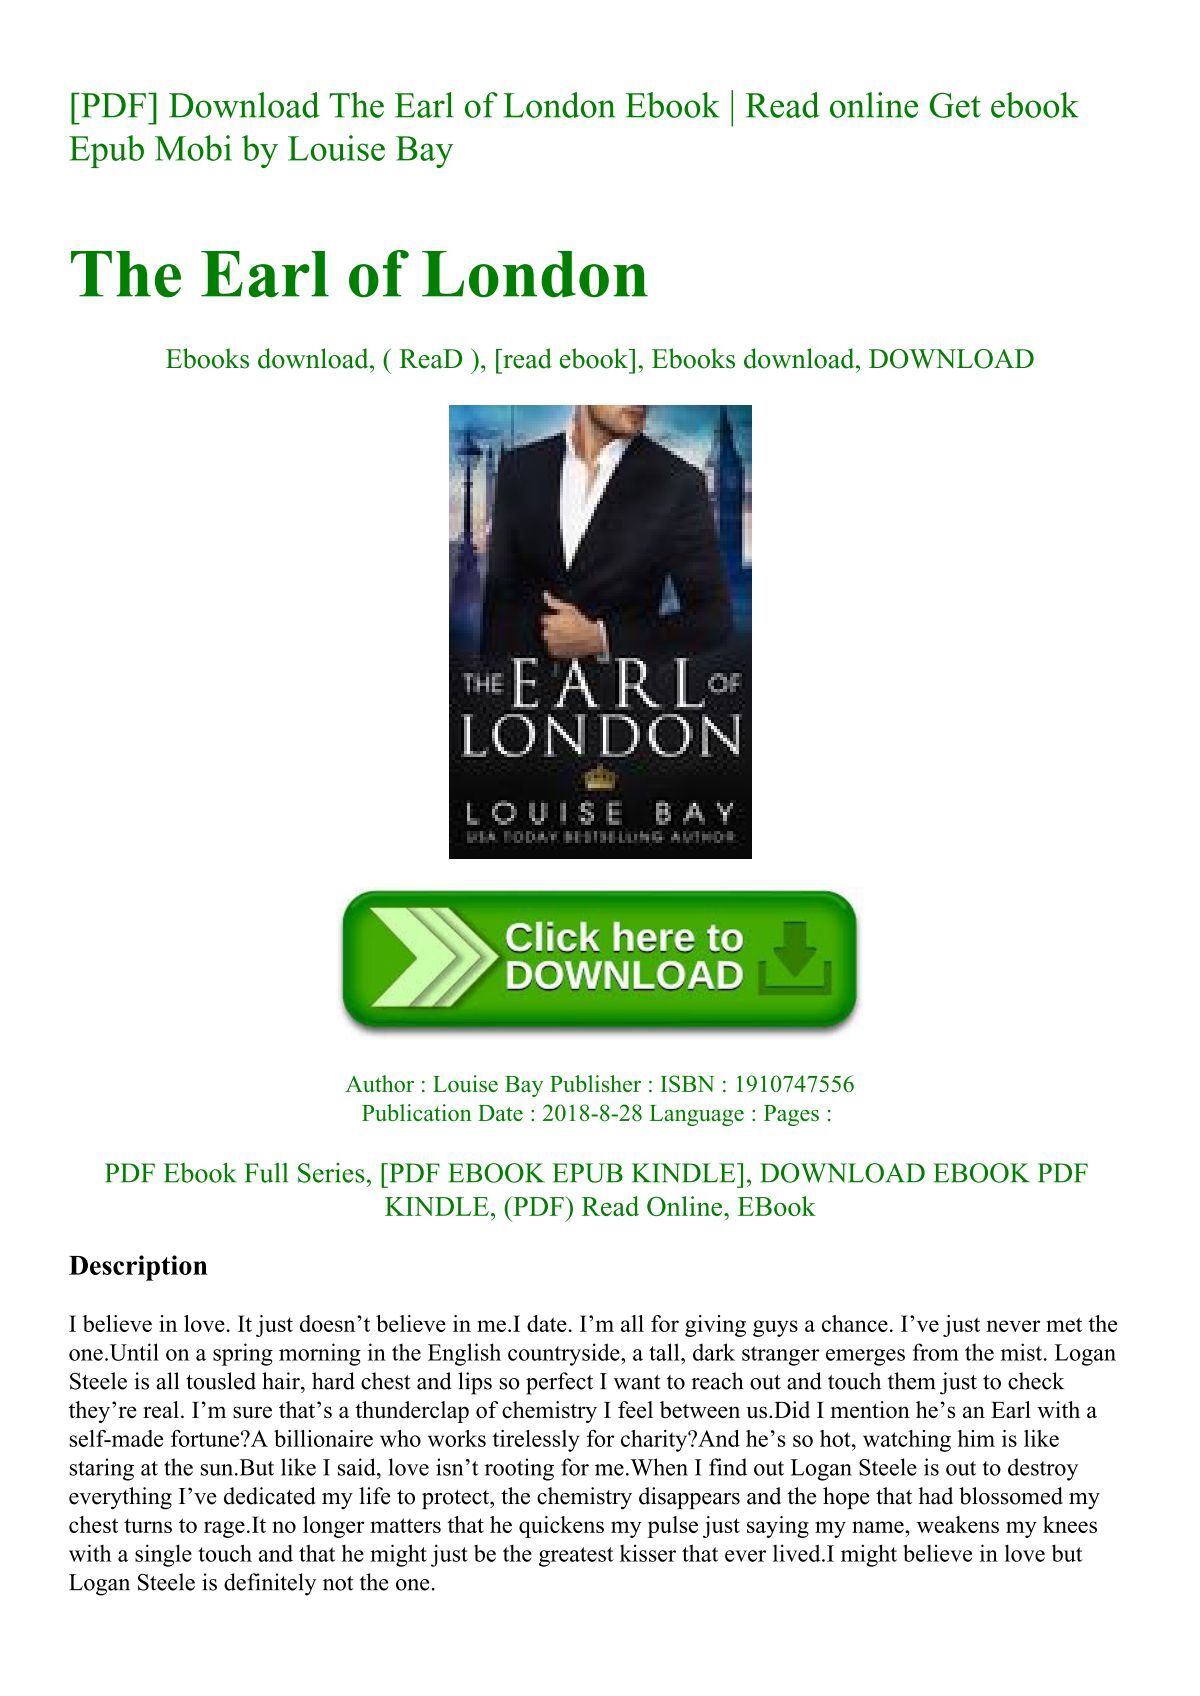 PDF] Download The Earl of London Ebook Read online Get ebook Epub